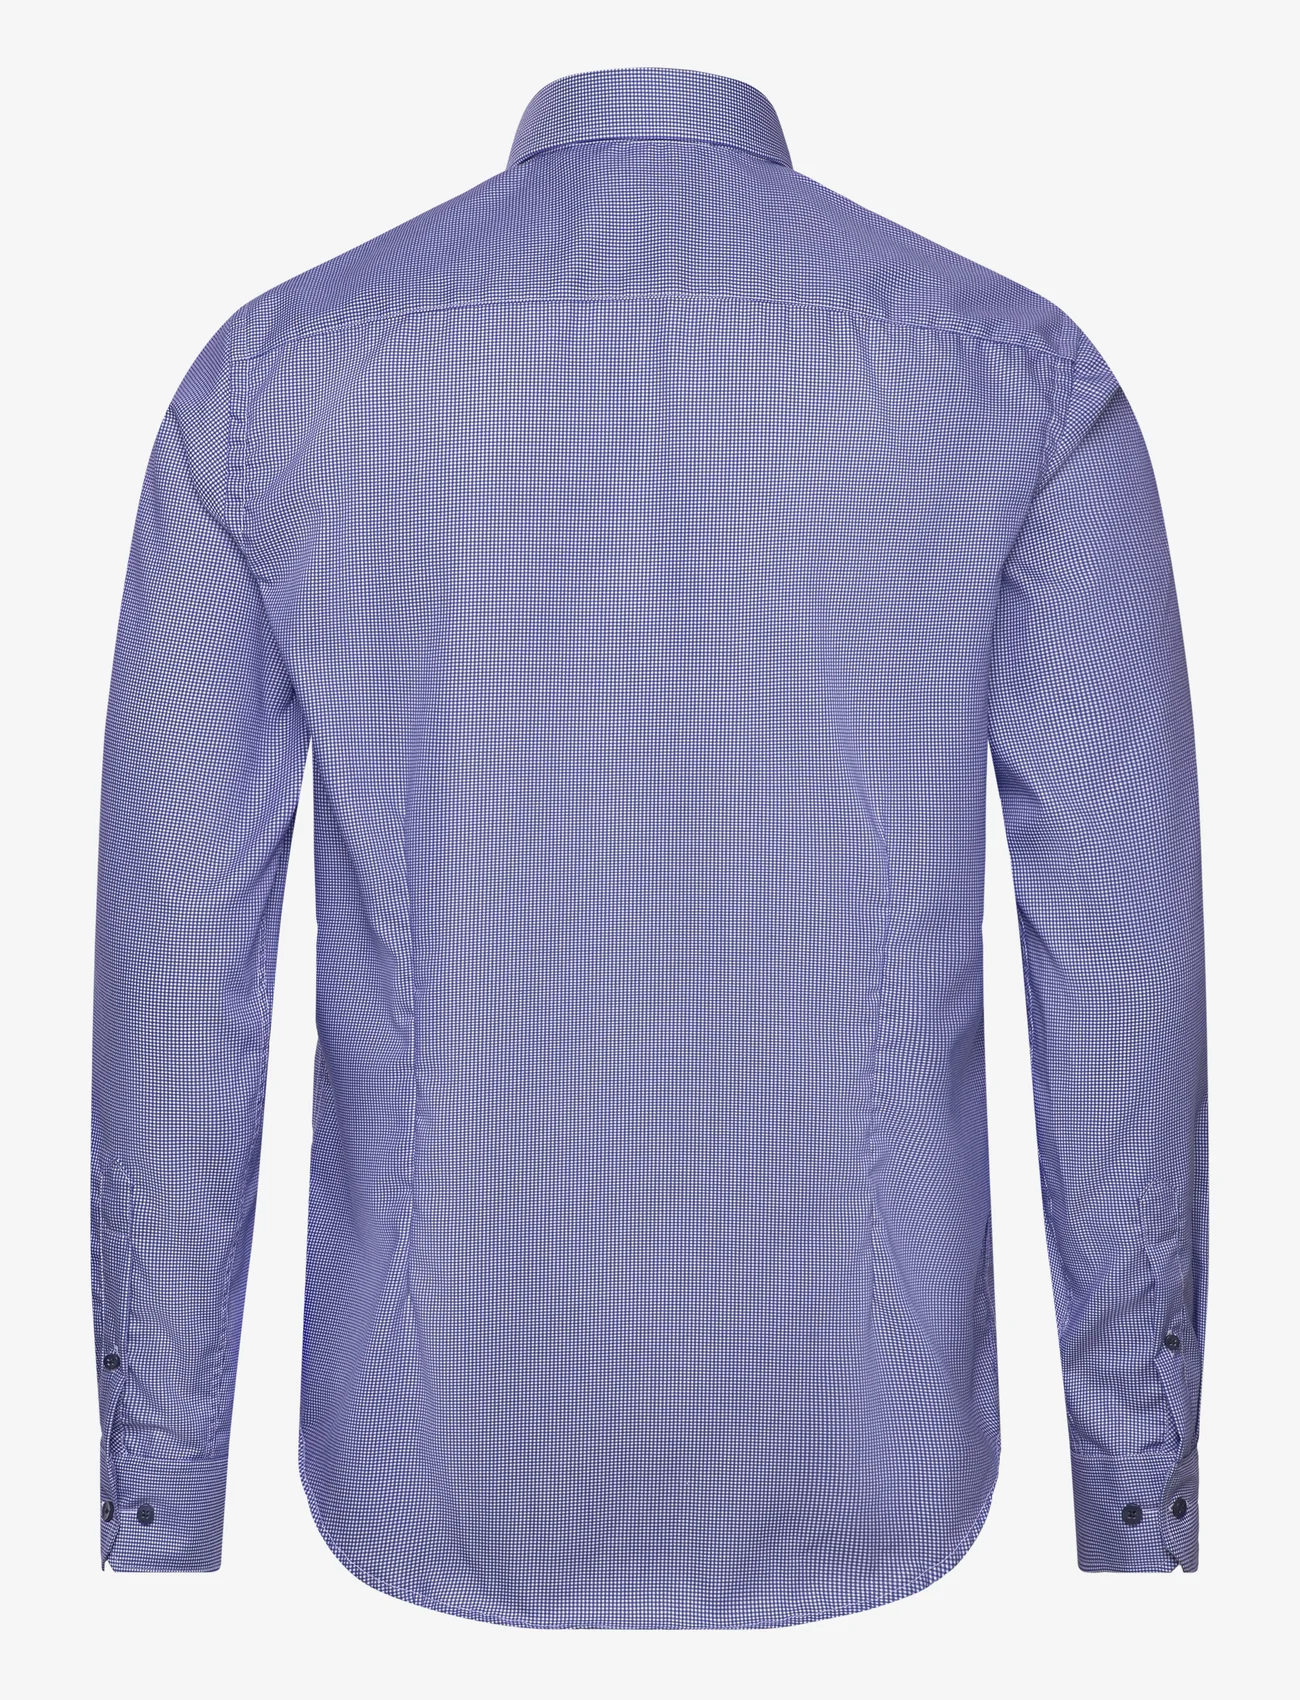 Bosweel Shirts Est. 1937 - Slim fit Mens shirt - business shirts - blue - 1